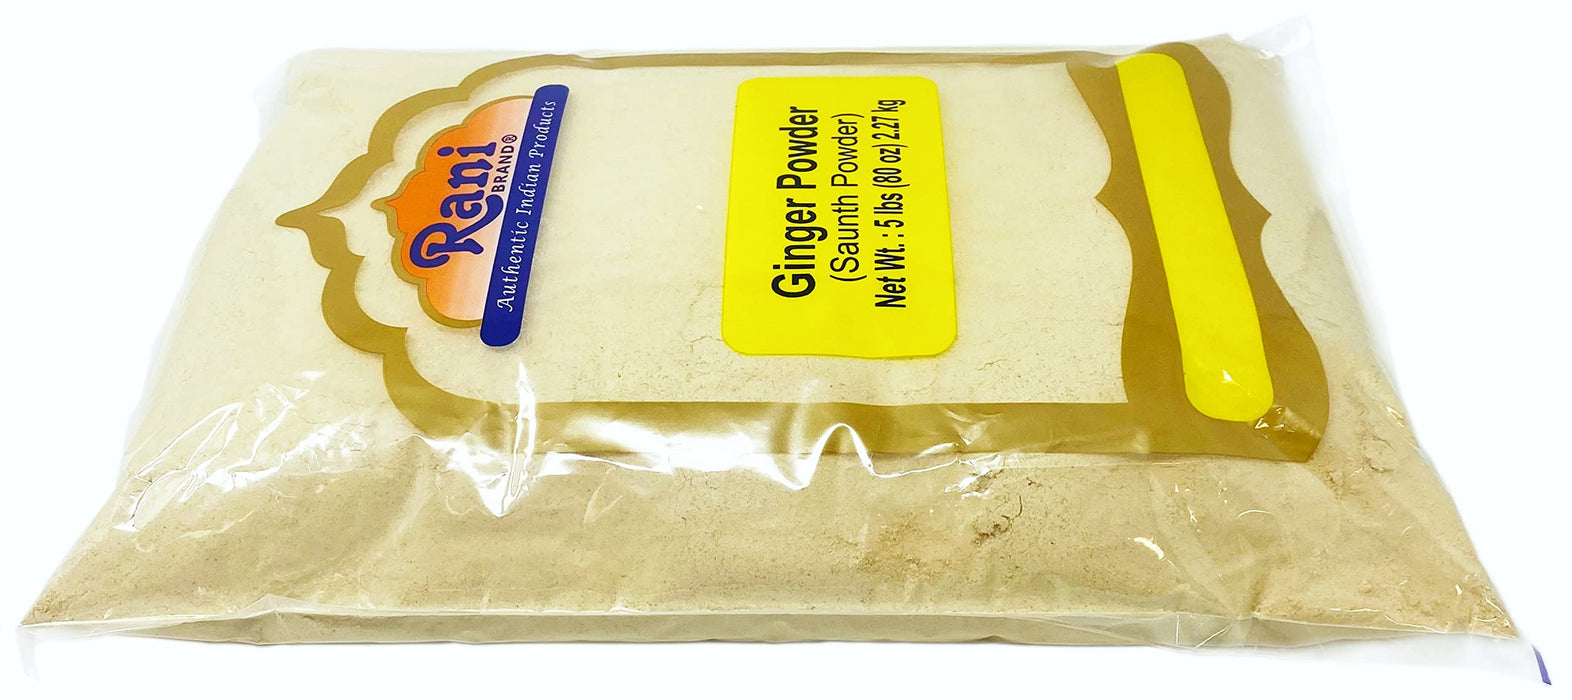 Rani Ginger (Adarak) Powder Ground, Spice 80oz (5lbs) 2.27kg Bulk ~ All Natural | Vegan | Gluten Friendly | NON-GMO | Indian Origin